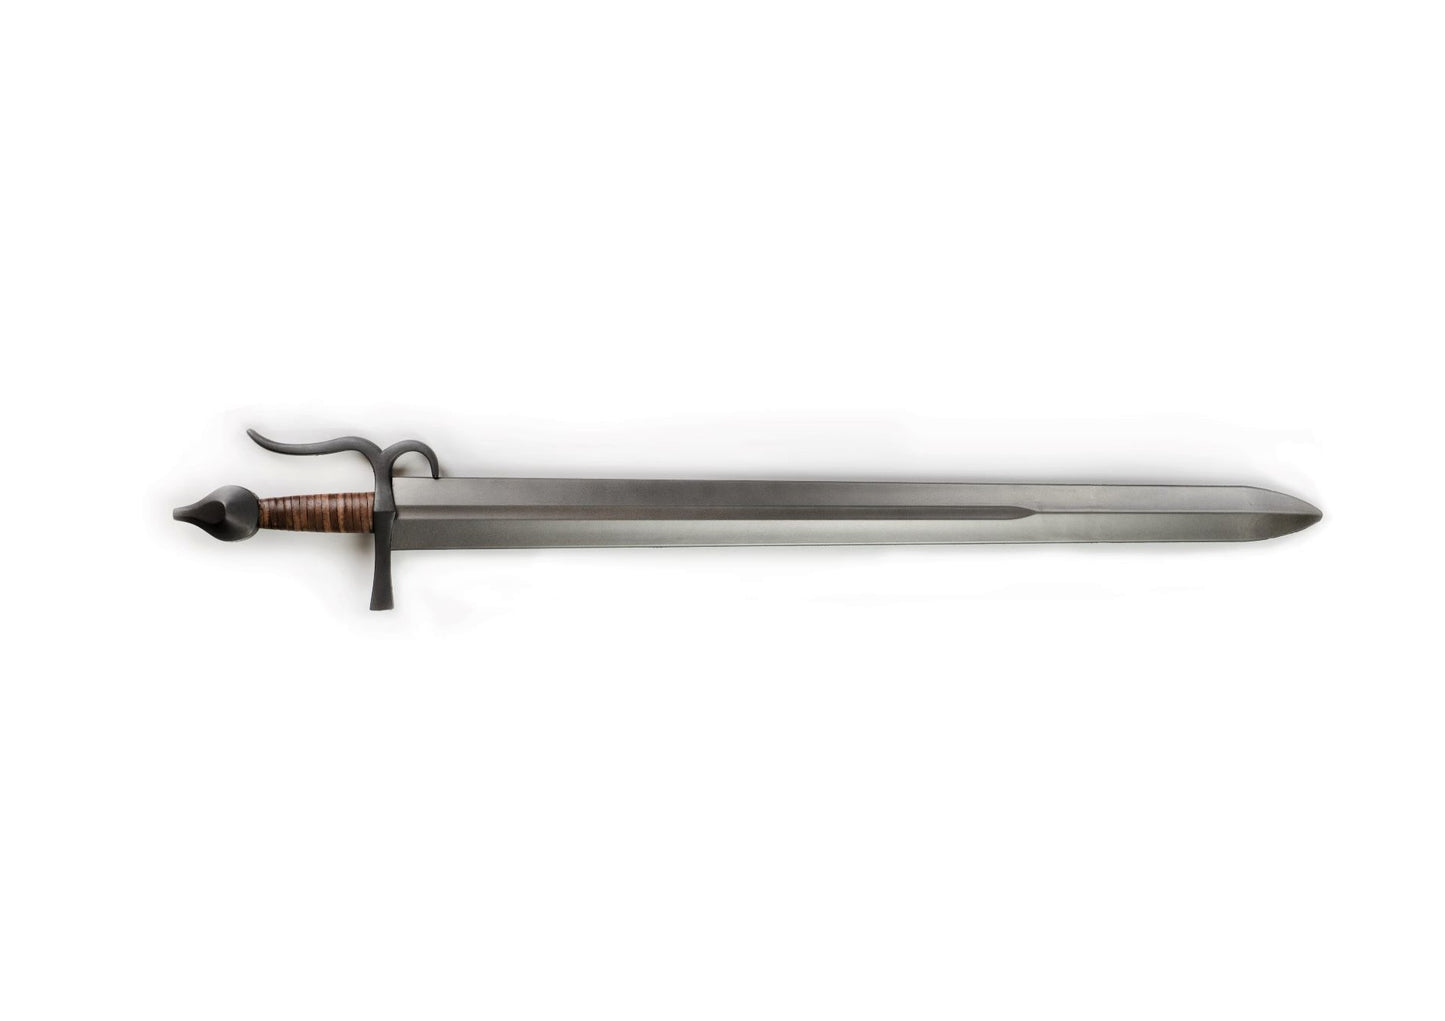 Doge - one-handed sword